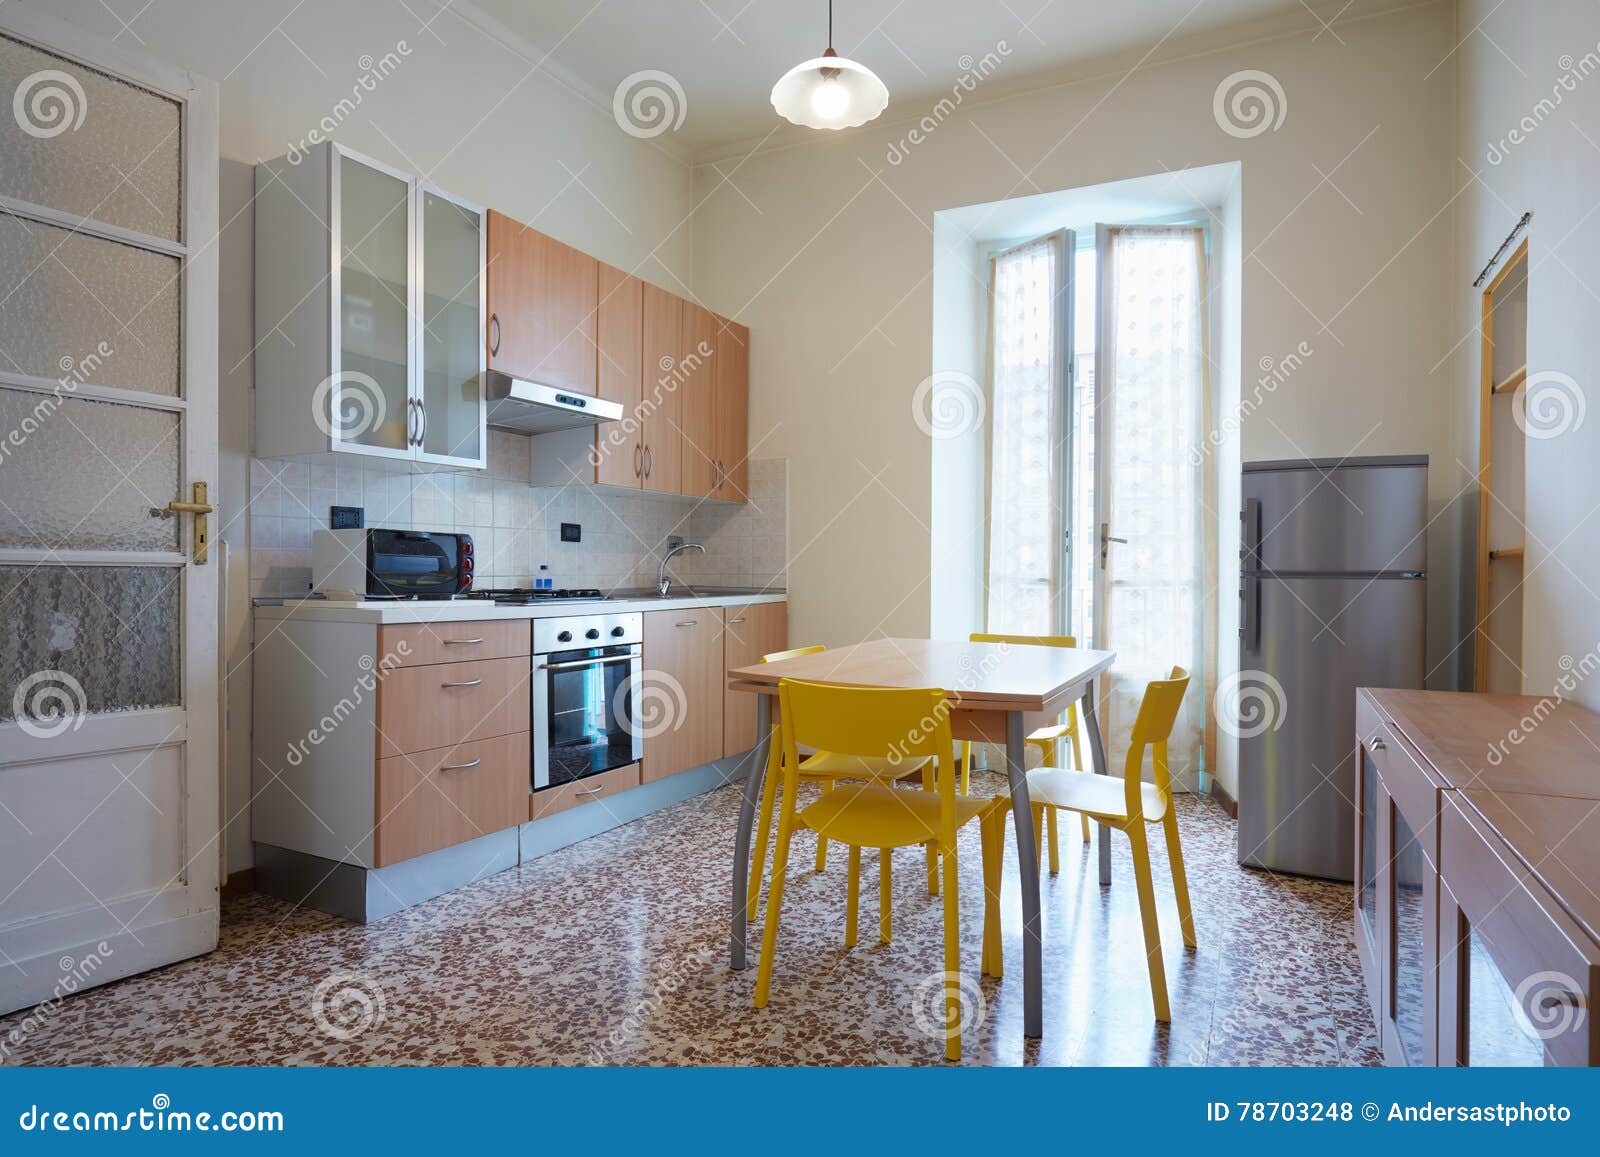 Simple Kitchen Interior Stock Photo Image Of Nobody 78703248